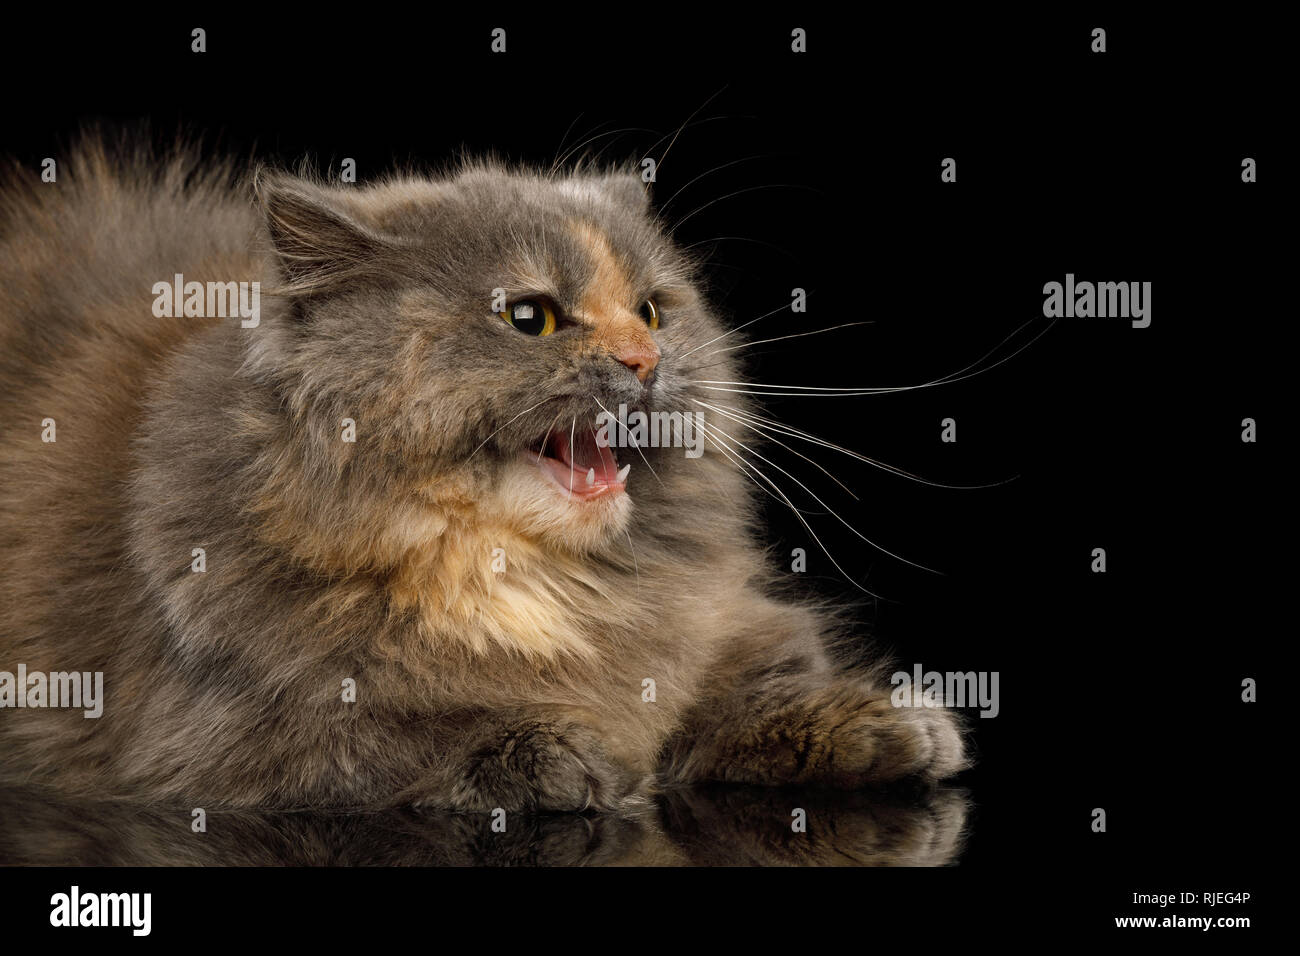 Afraid Munchkin Cat tortoise fur,Lying and Hiss at side Isolated Black background Stock Photo